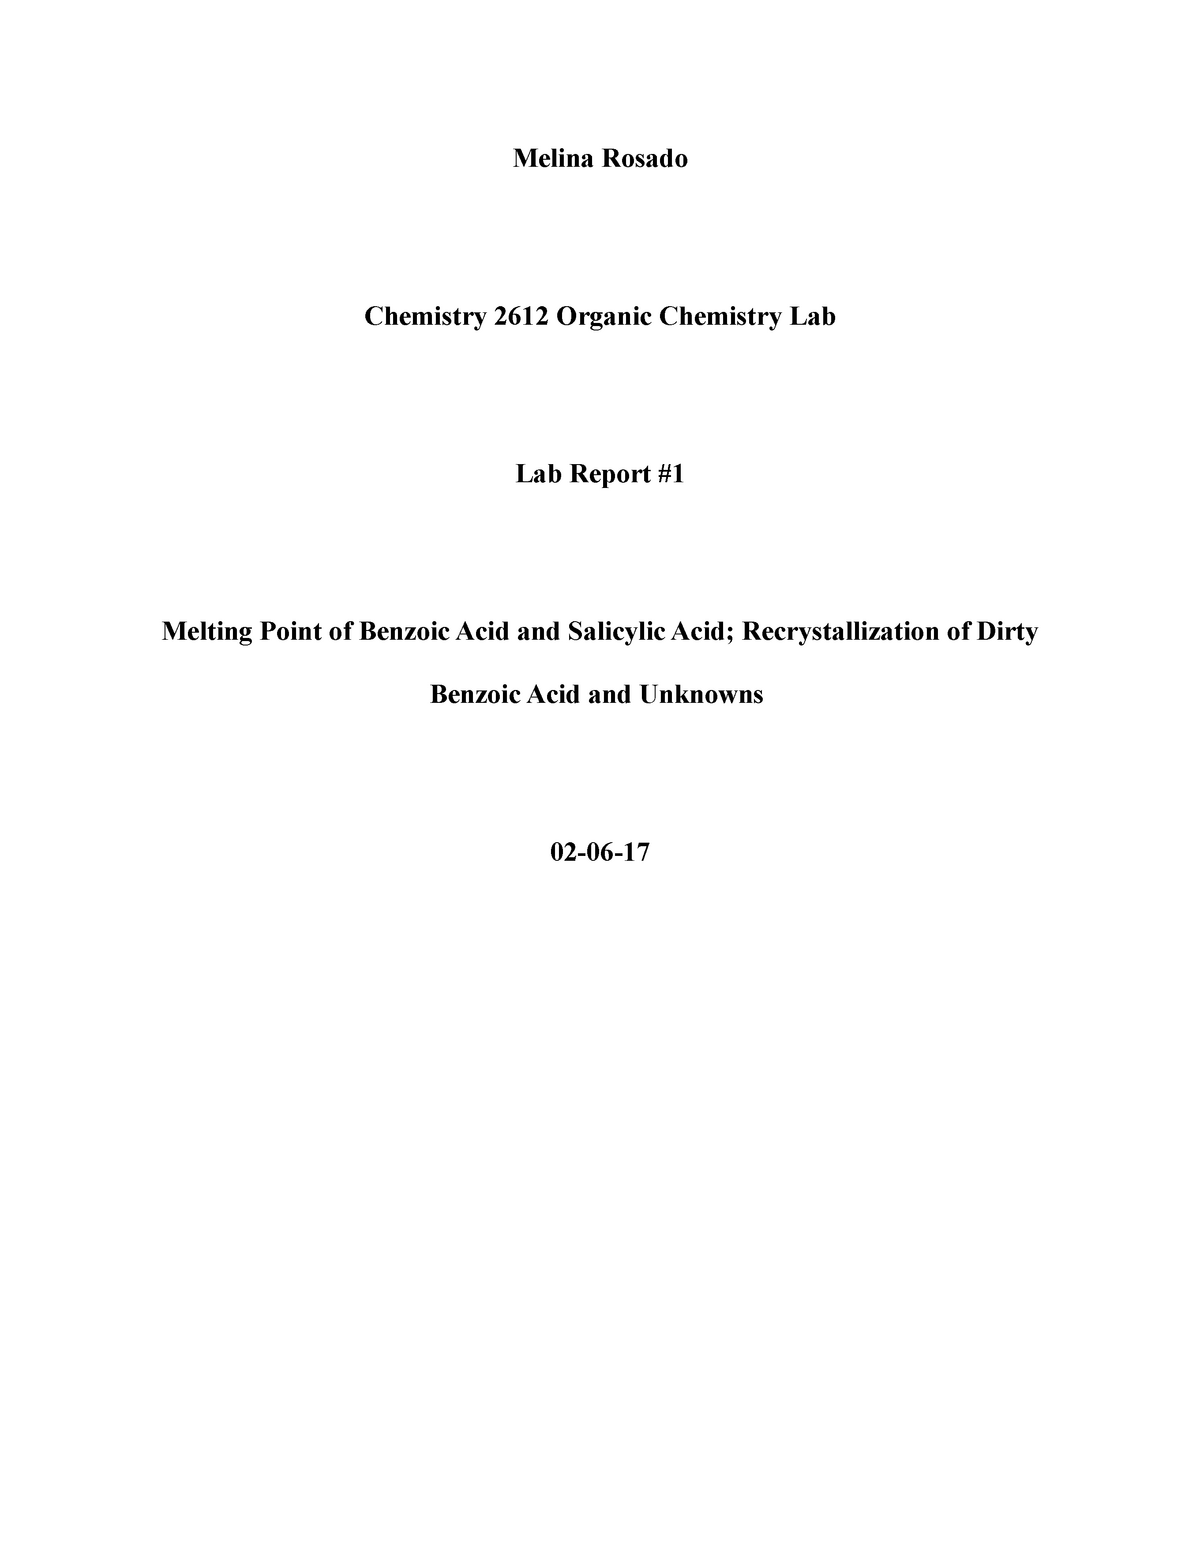 organic chemistry research proposal pdf